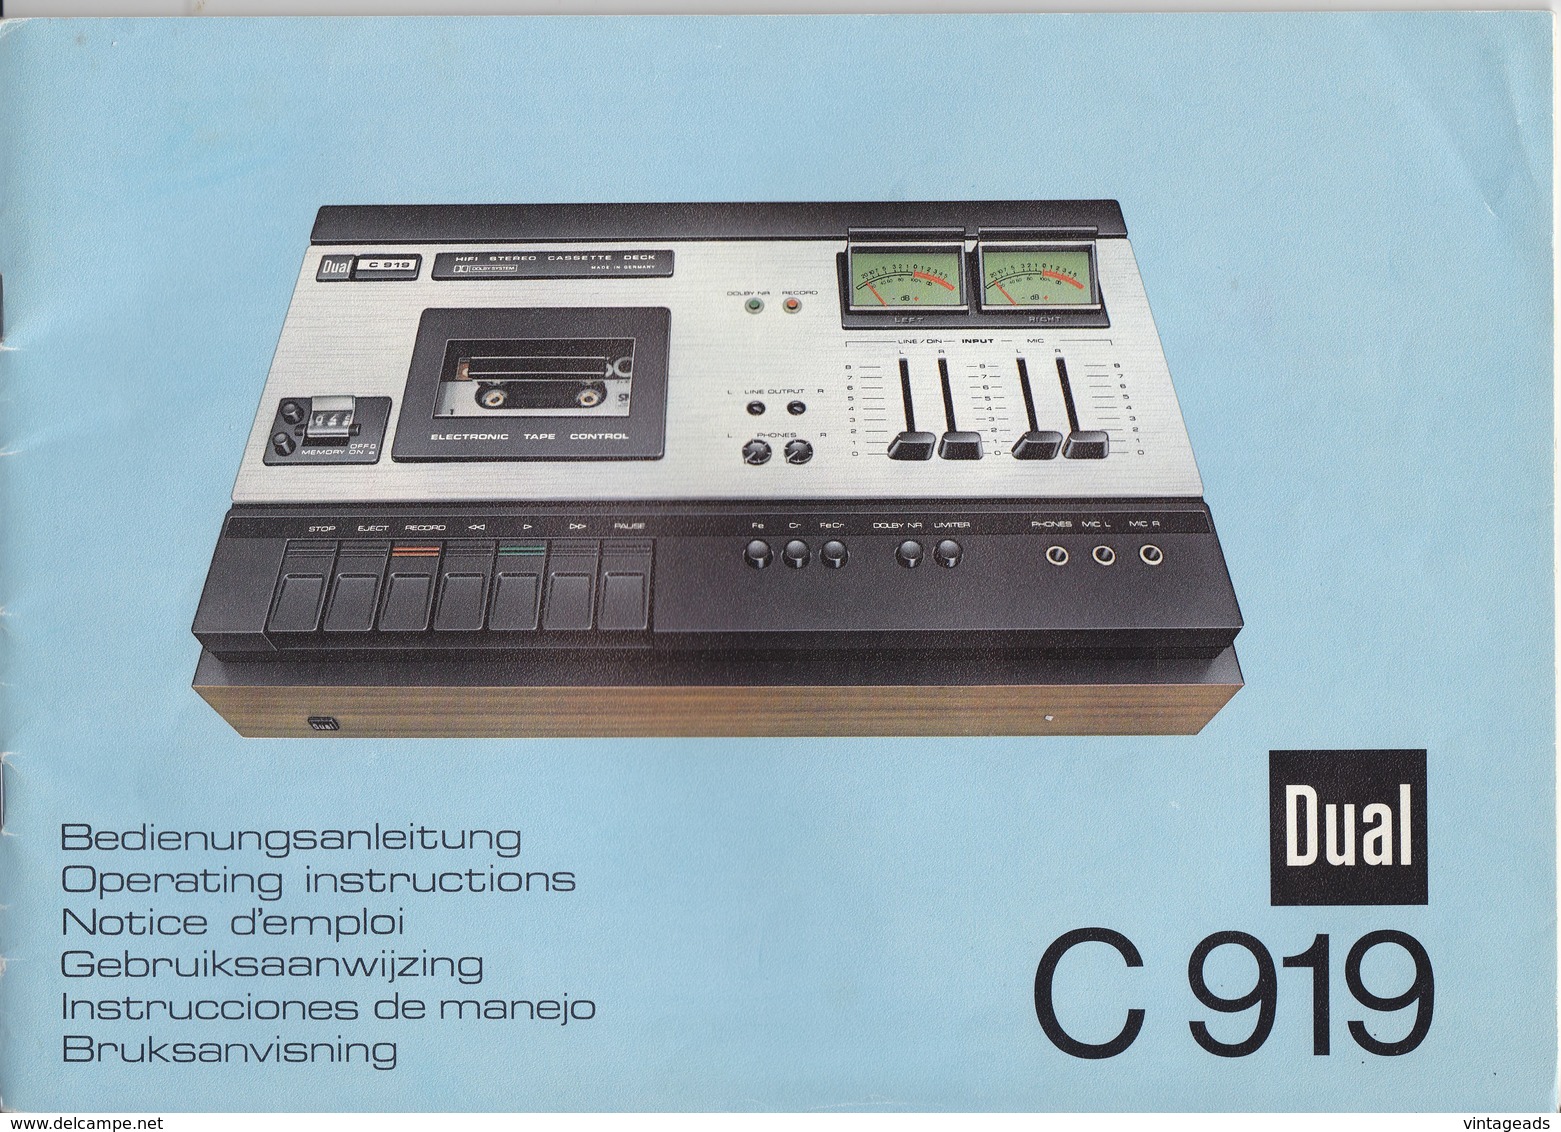 (AD387) Original Werbung Und Bedienungsanleitung DUAL C919 Kassettendeck, 1976 - Manuales De Reparación